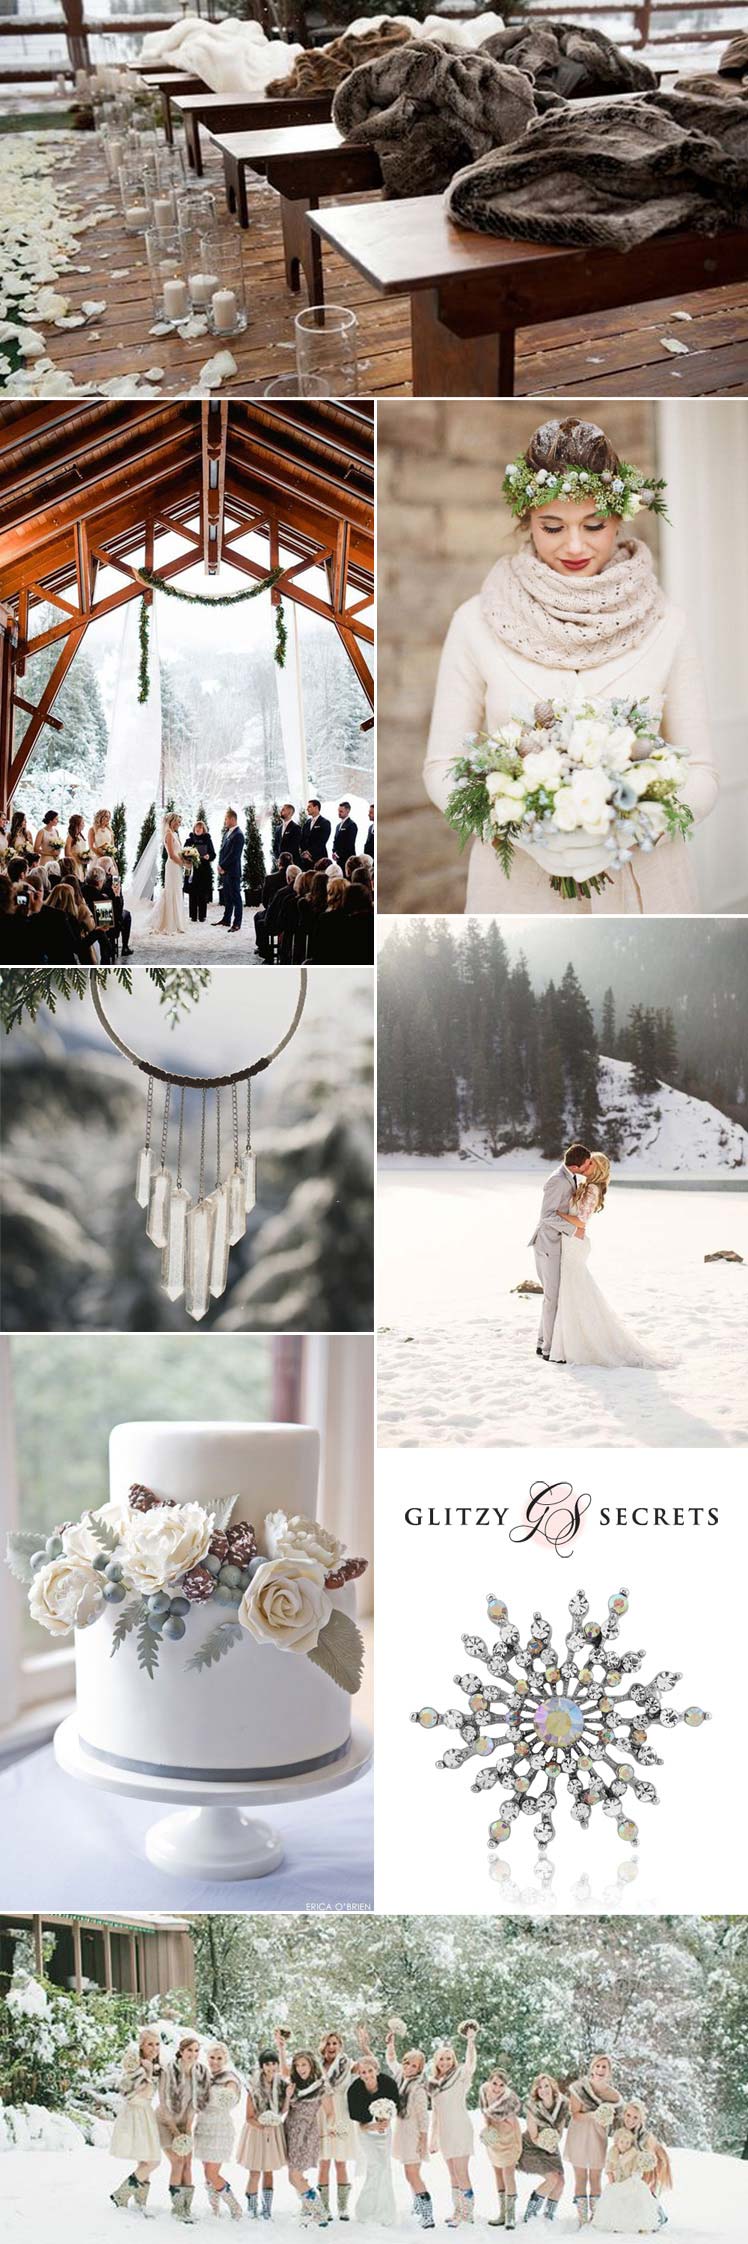 Ideas for a beautiful snow wedding theme